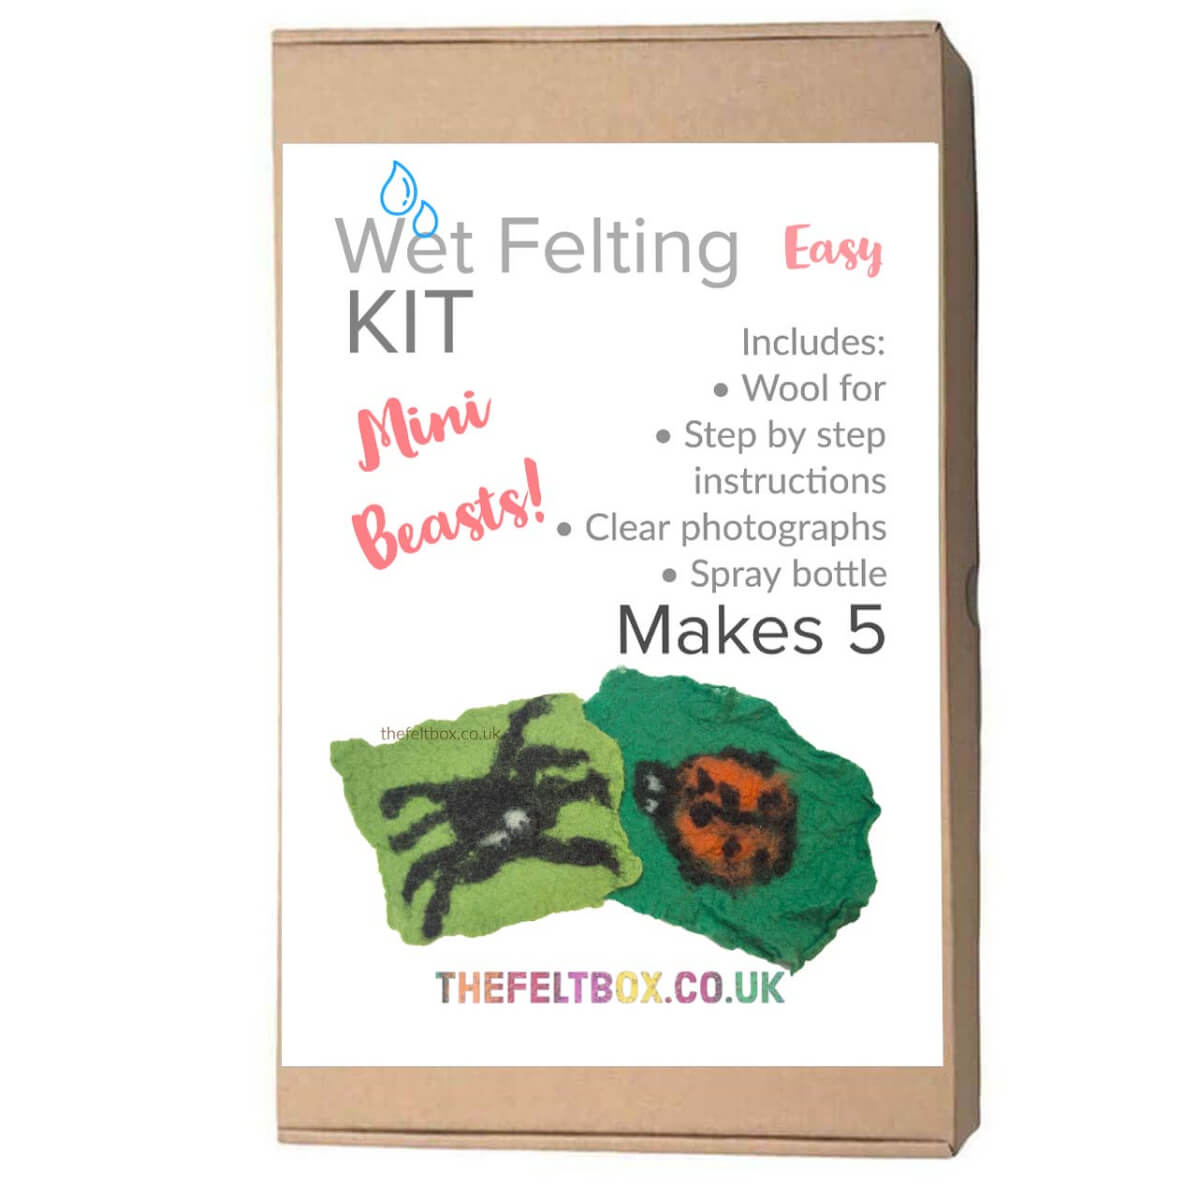 Mini Beast Wet Felting School Kit for 5 People